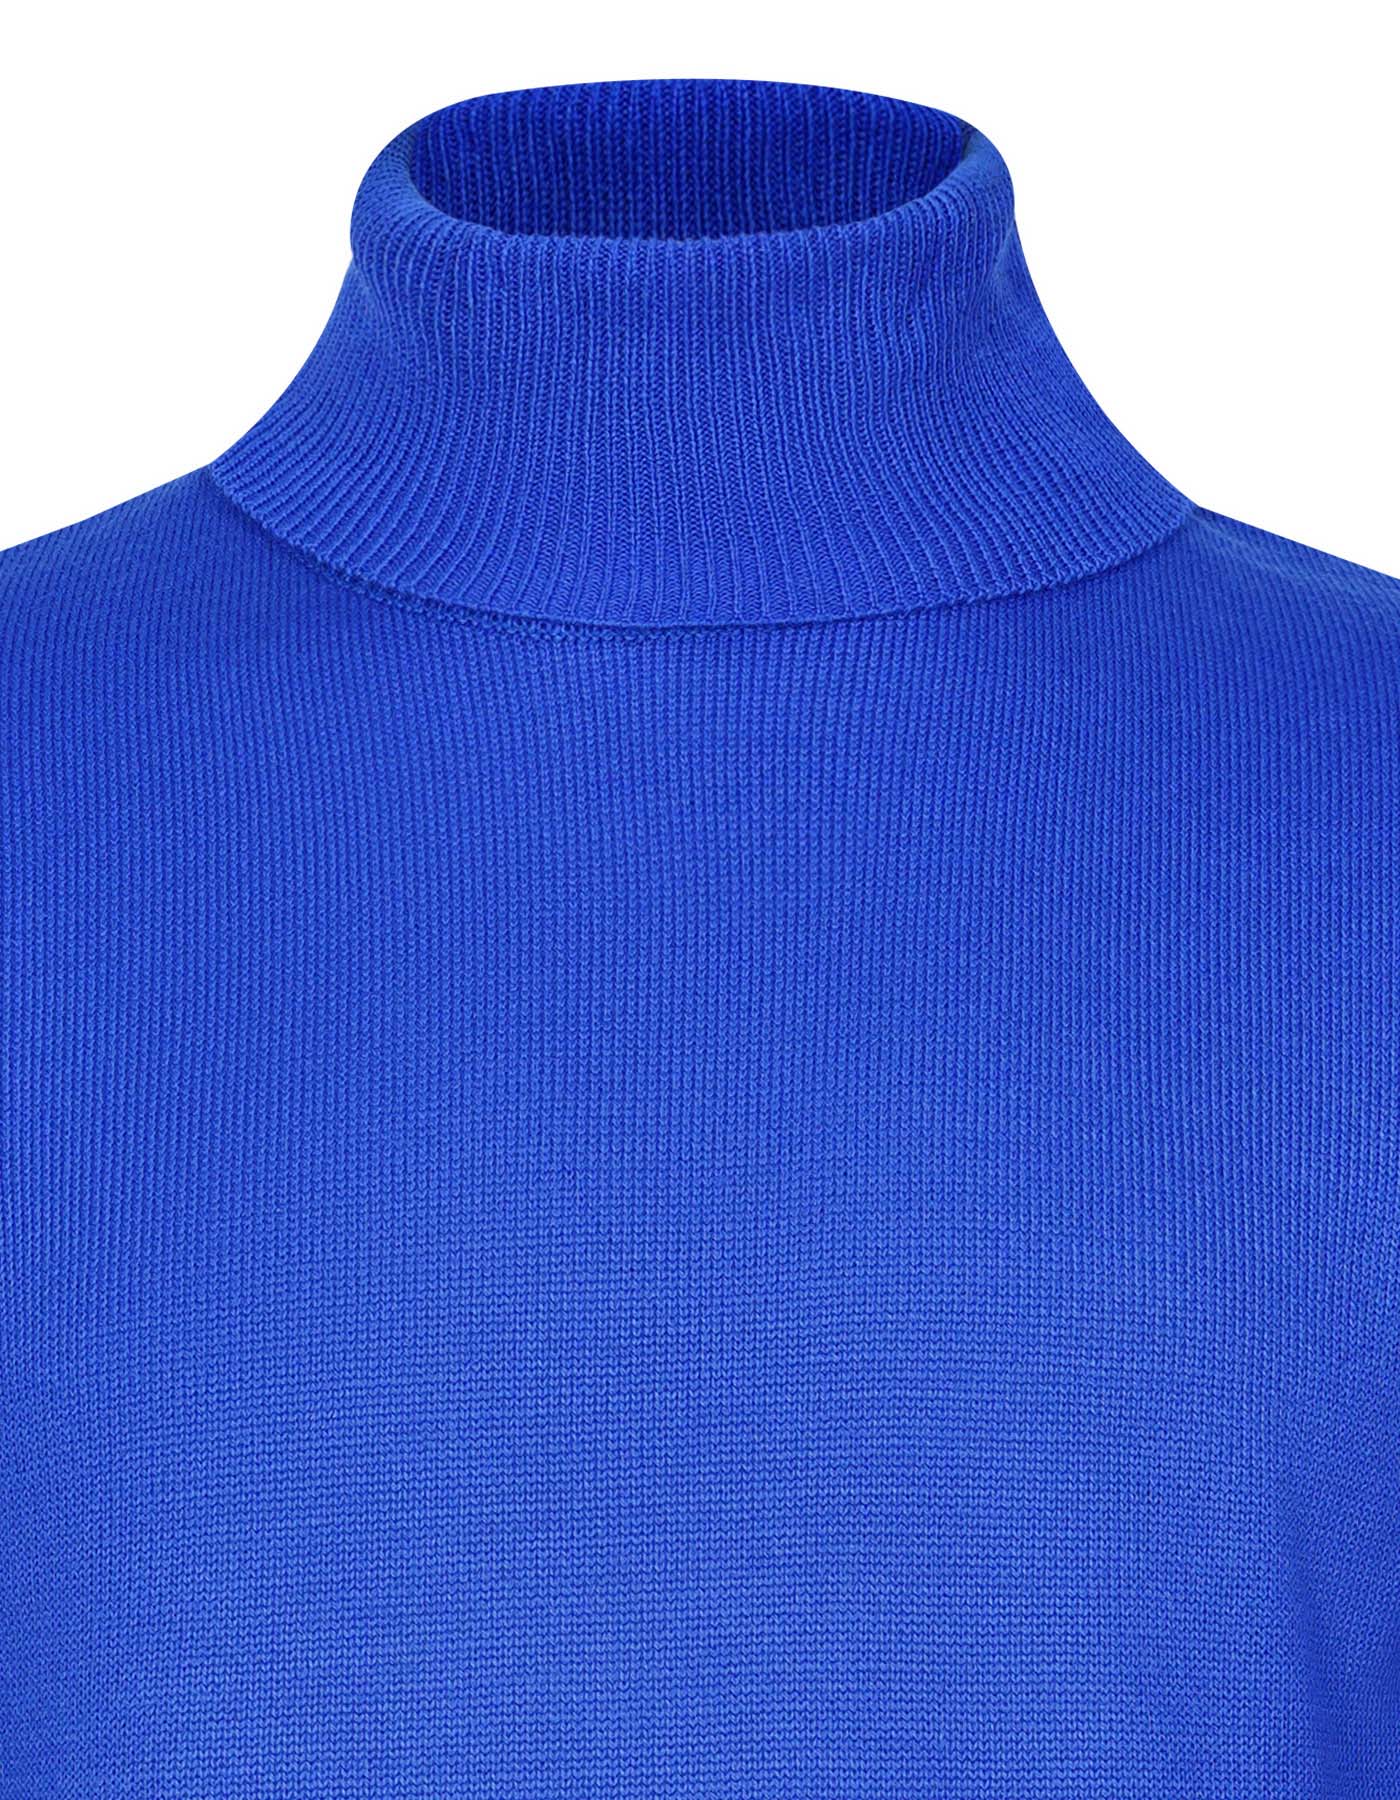 Mens Blue High Neck Sweater